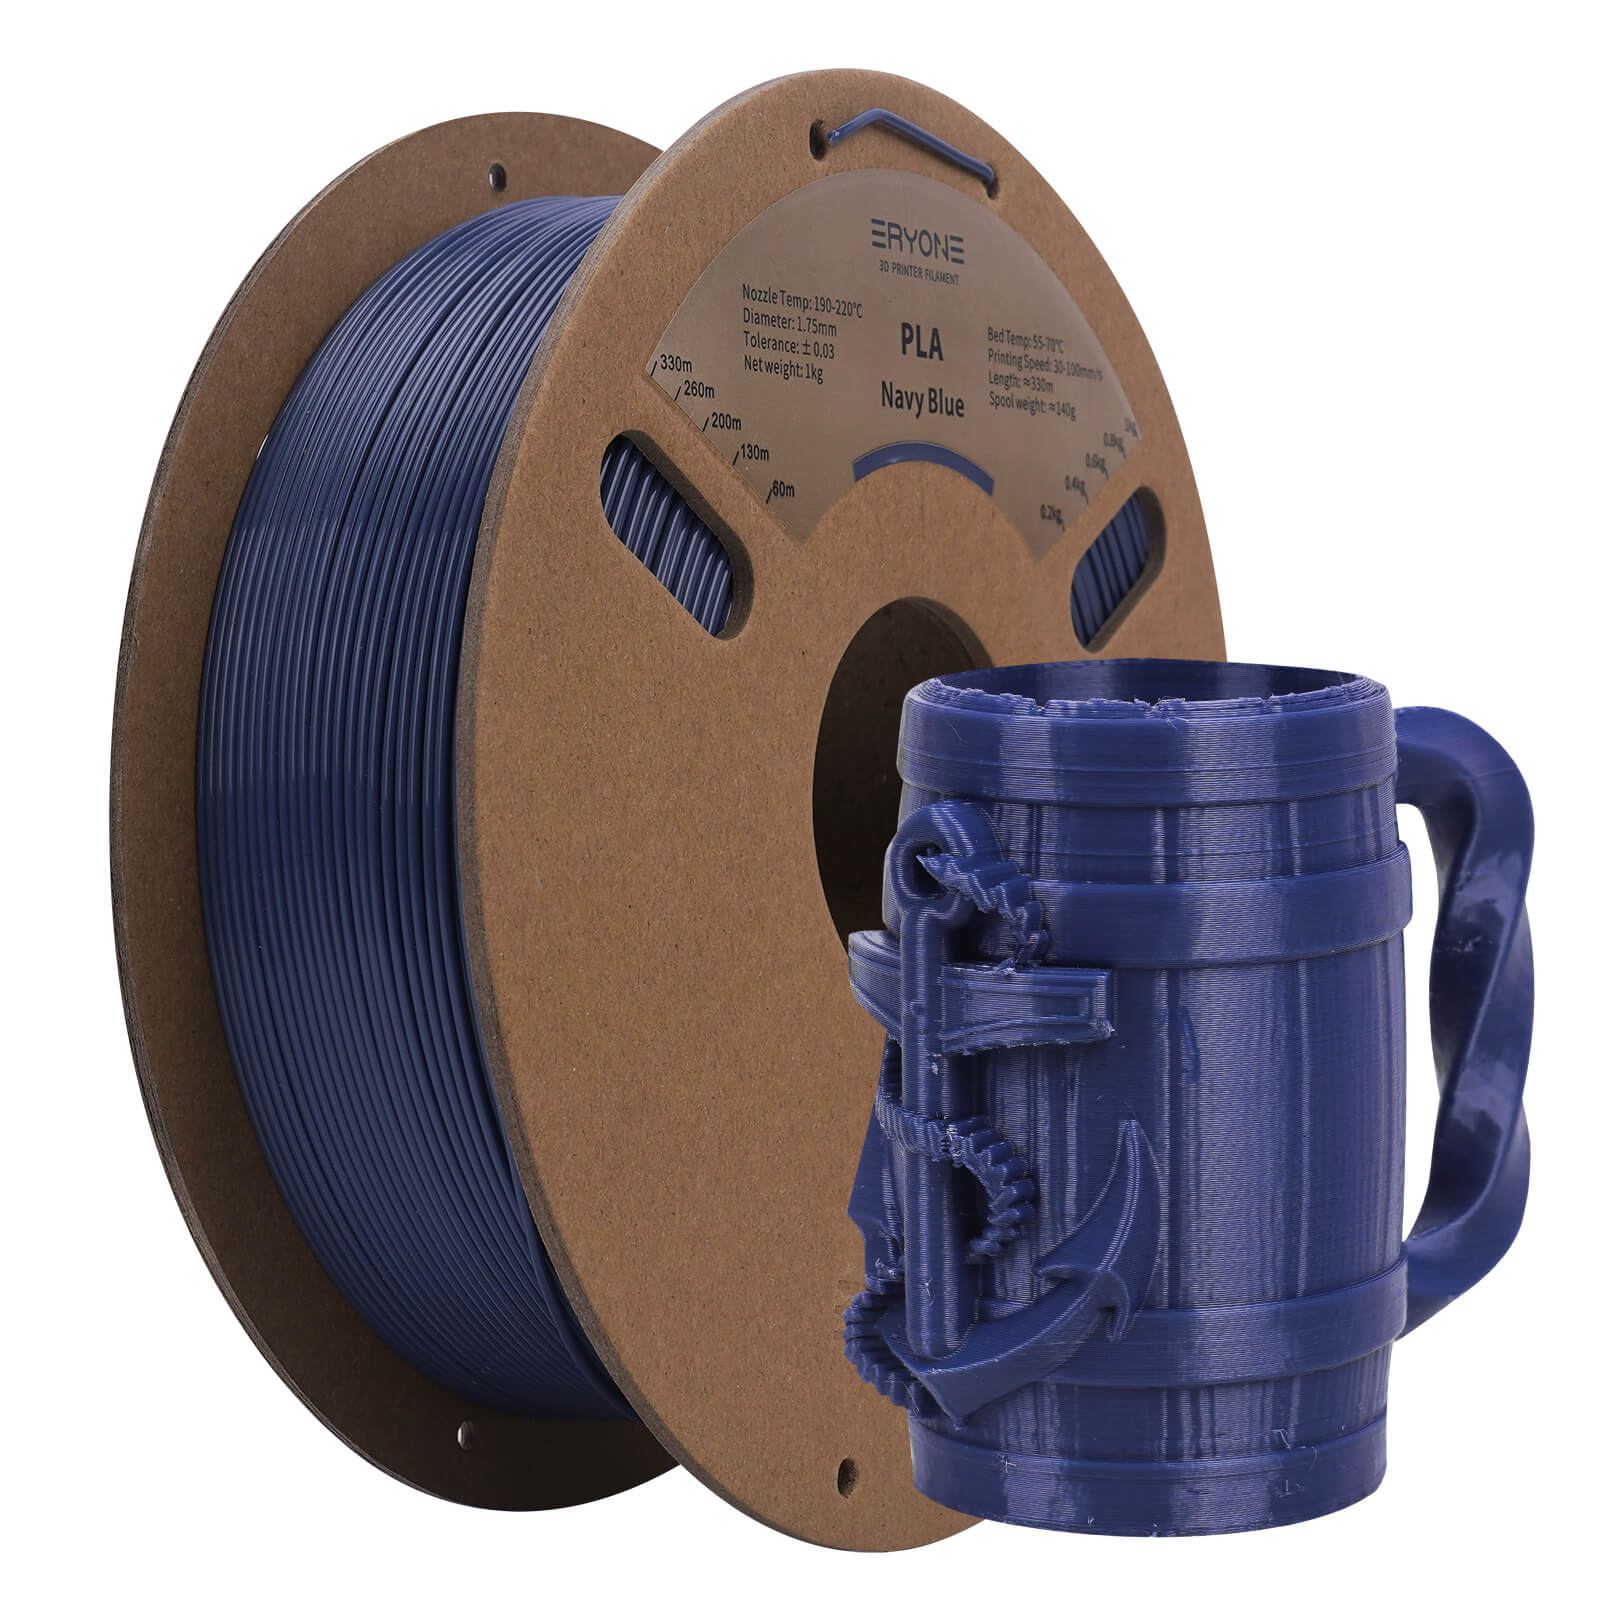 ERYONE PLA 3D Printer Filament 1.75mm, Dimensional Accuracy +/- 0.05 mm 1kg, Navy Blue &amp; Army Green 